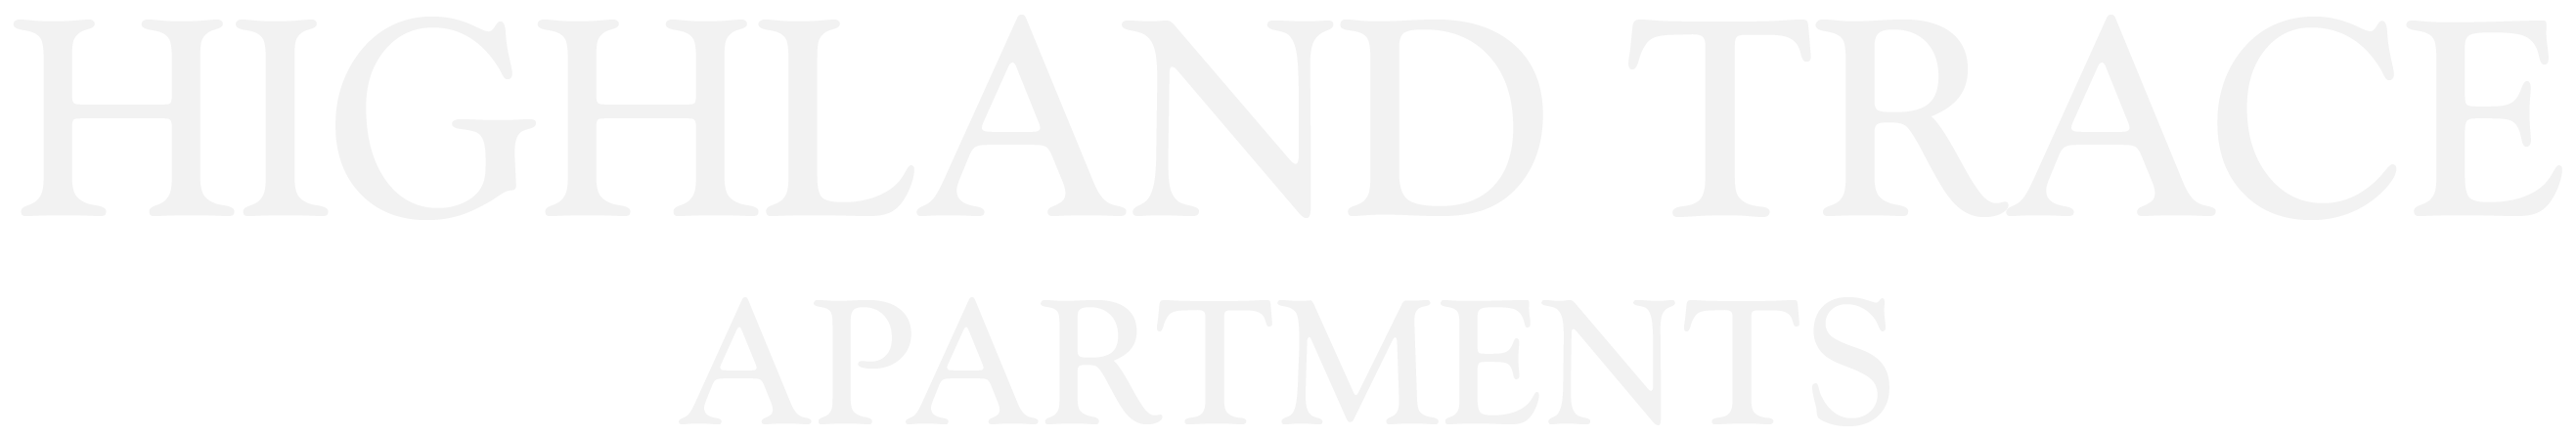 Highland Trace Apartments Logo